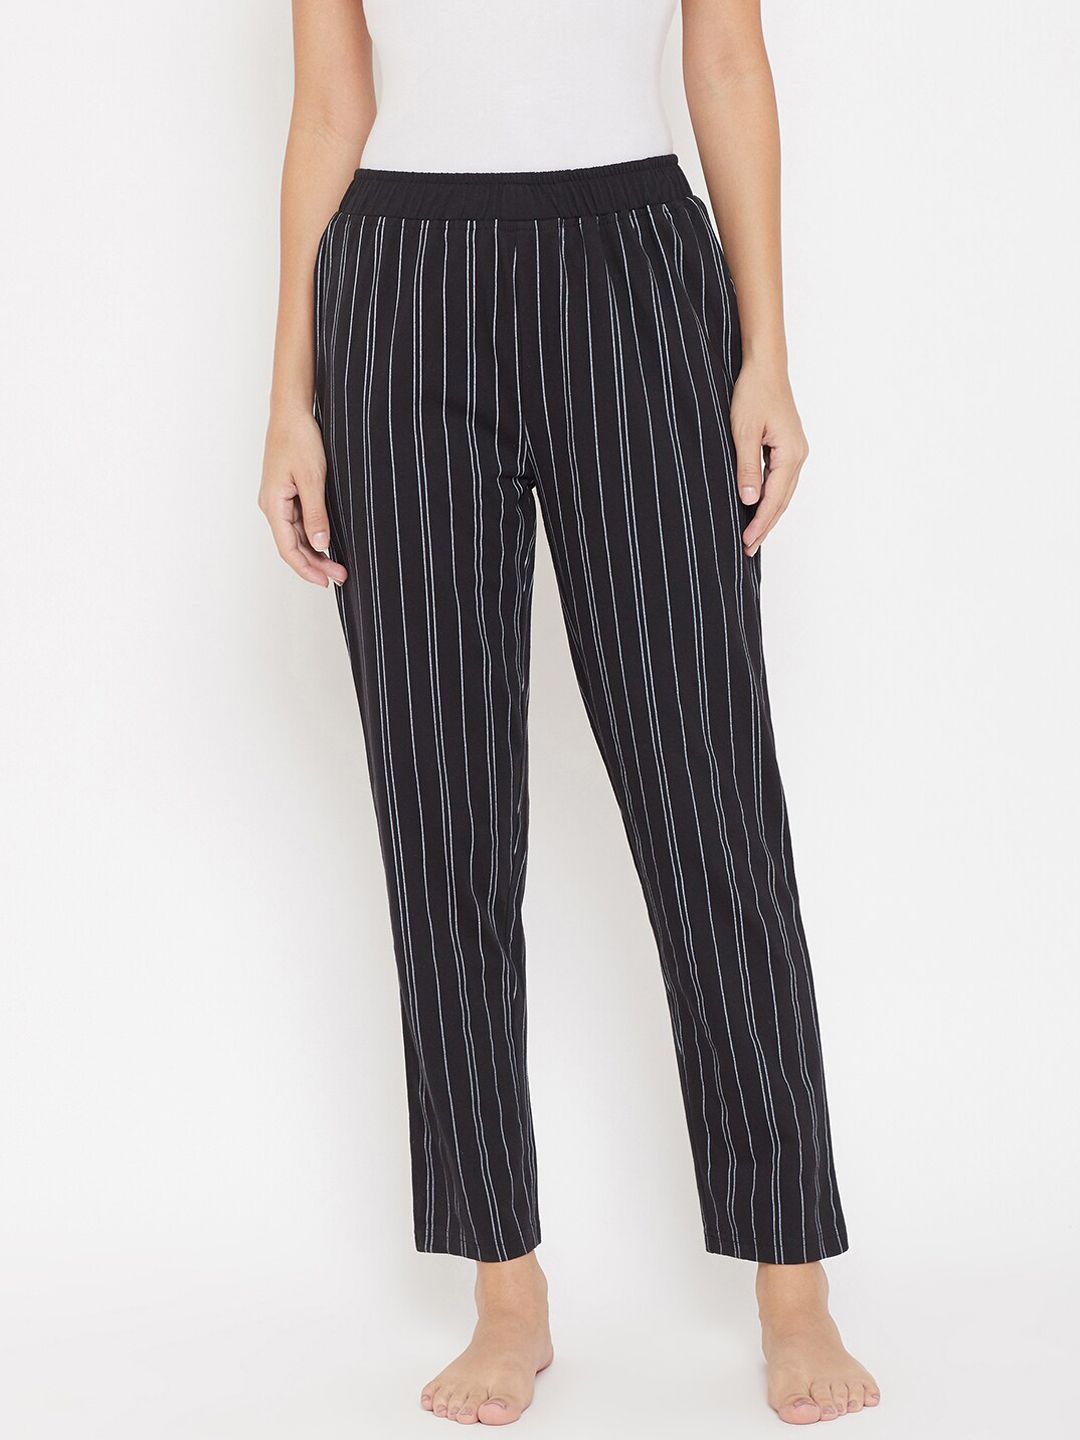 Okane Women Black & White Striped Lounge Pants Price in India